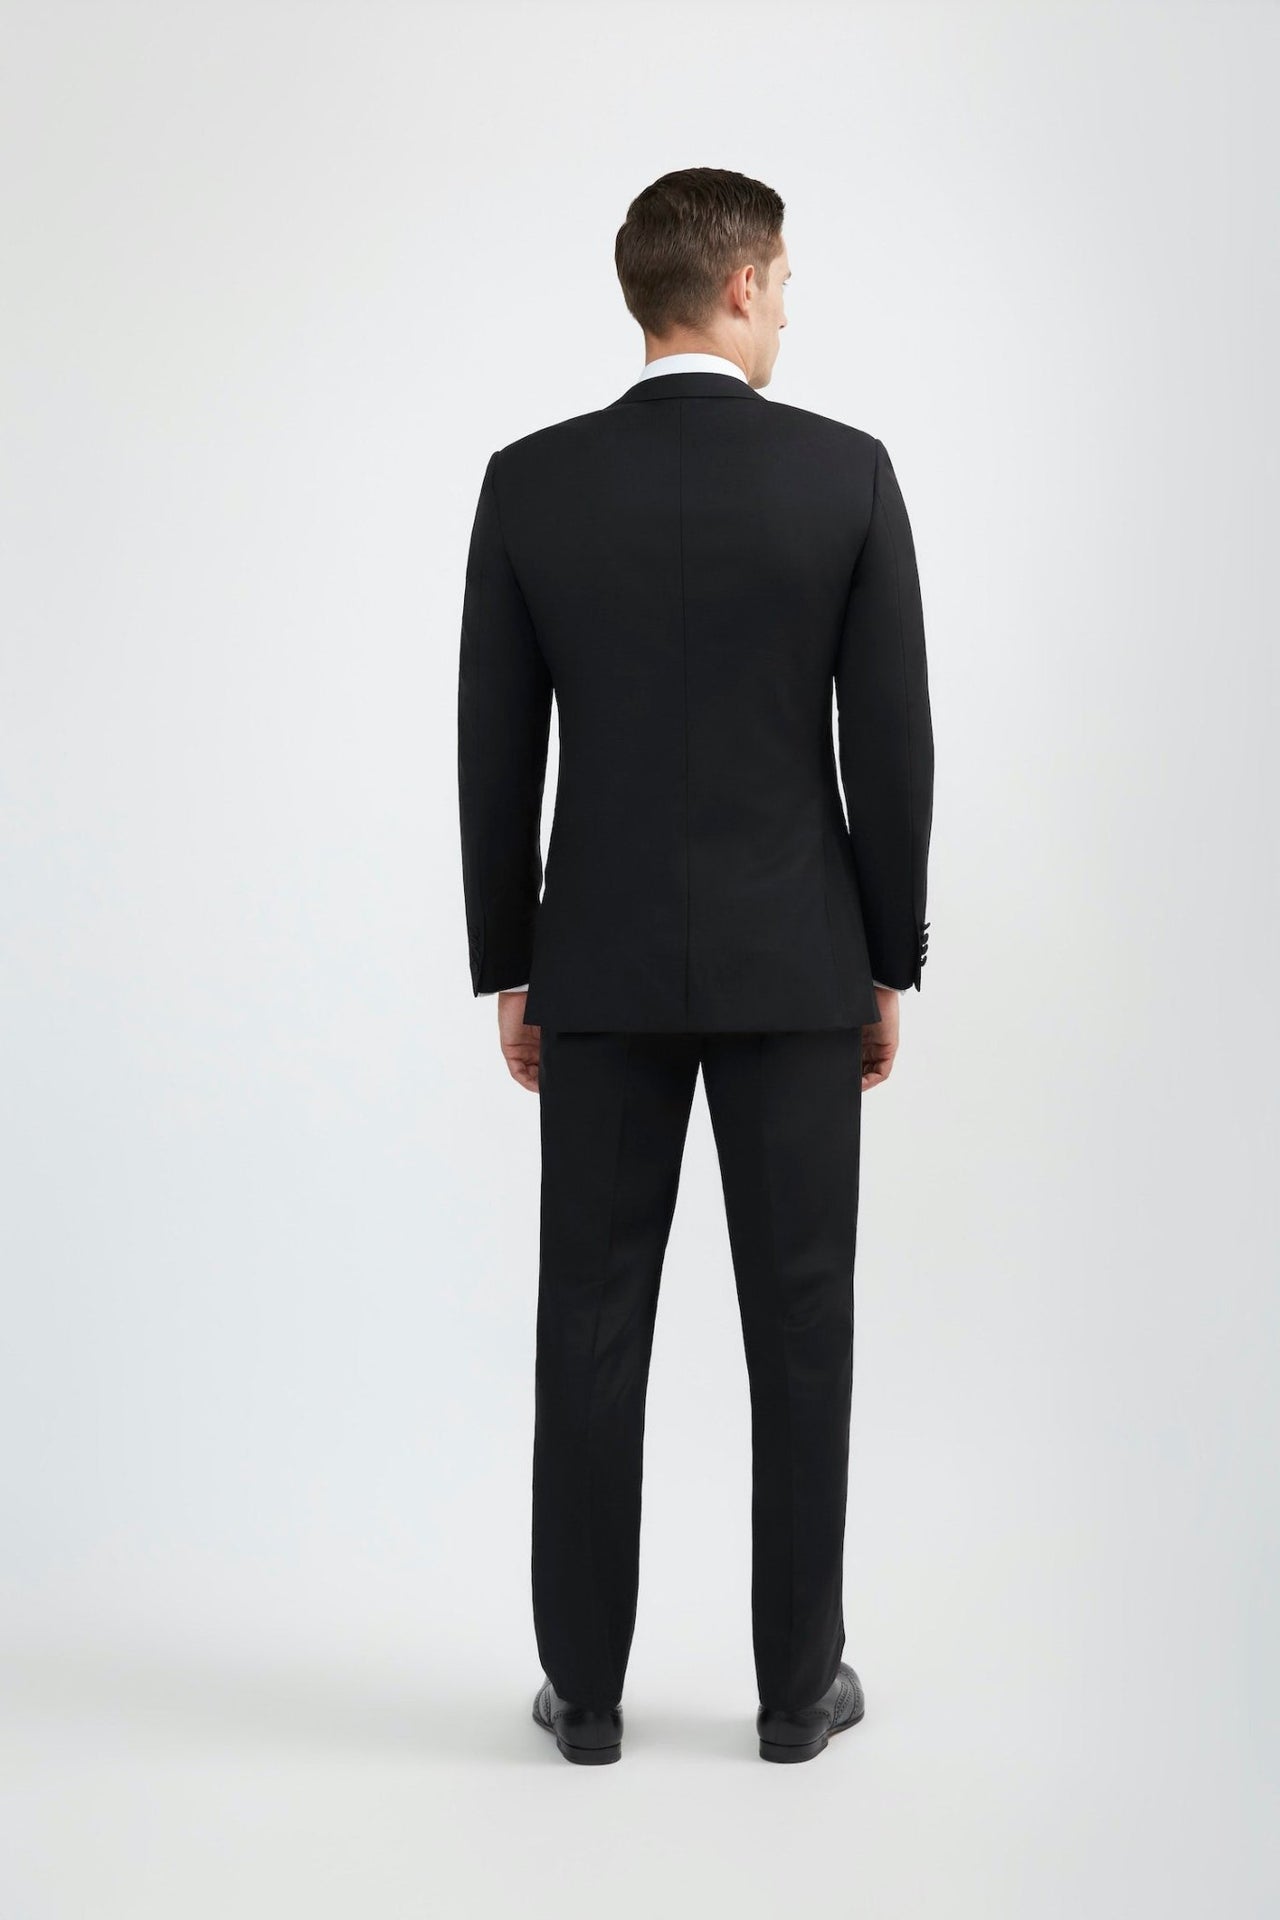 Luxurious Classic Black Tuxedo  Purchase an Elegant Italian Wool Tuxedo -  Tomasso Black – Tomasso Black